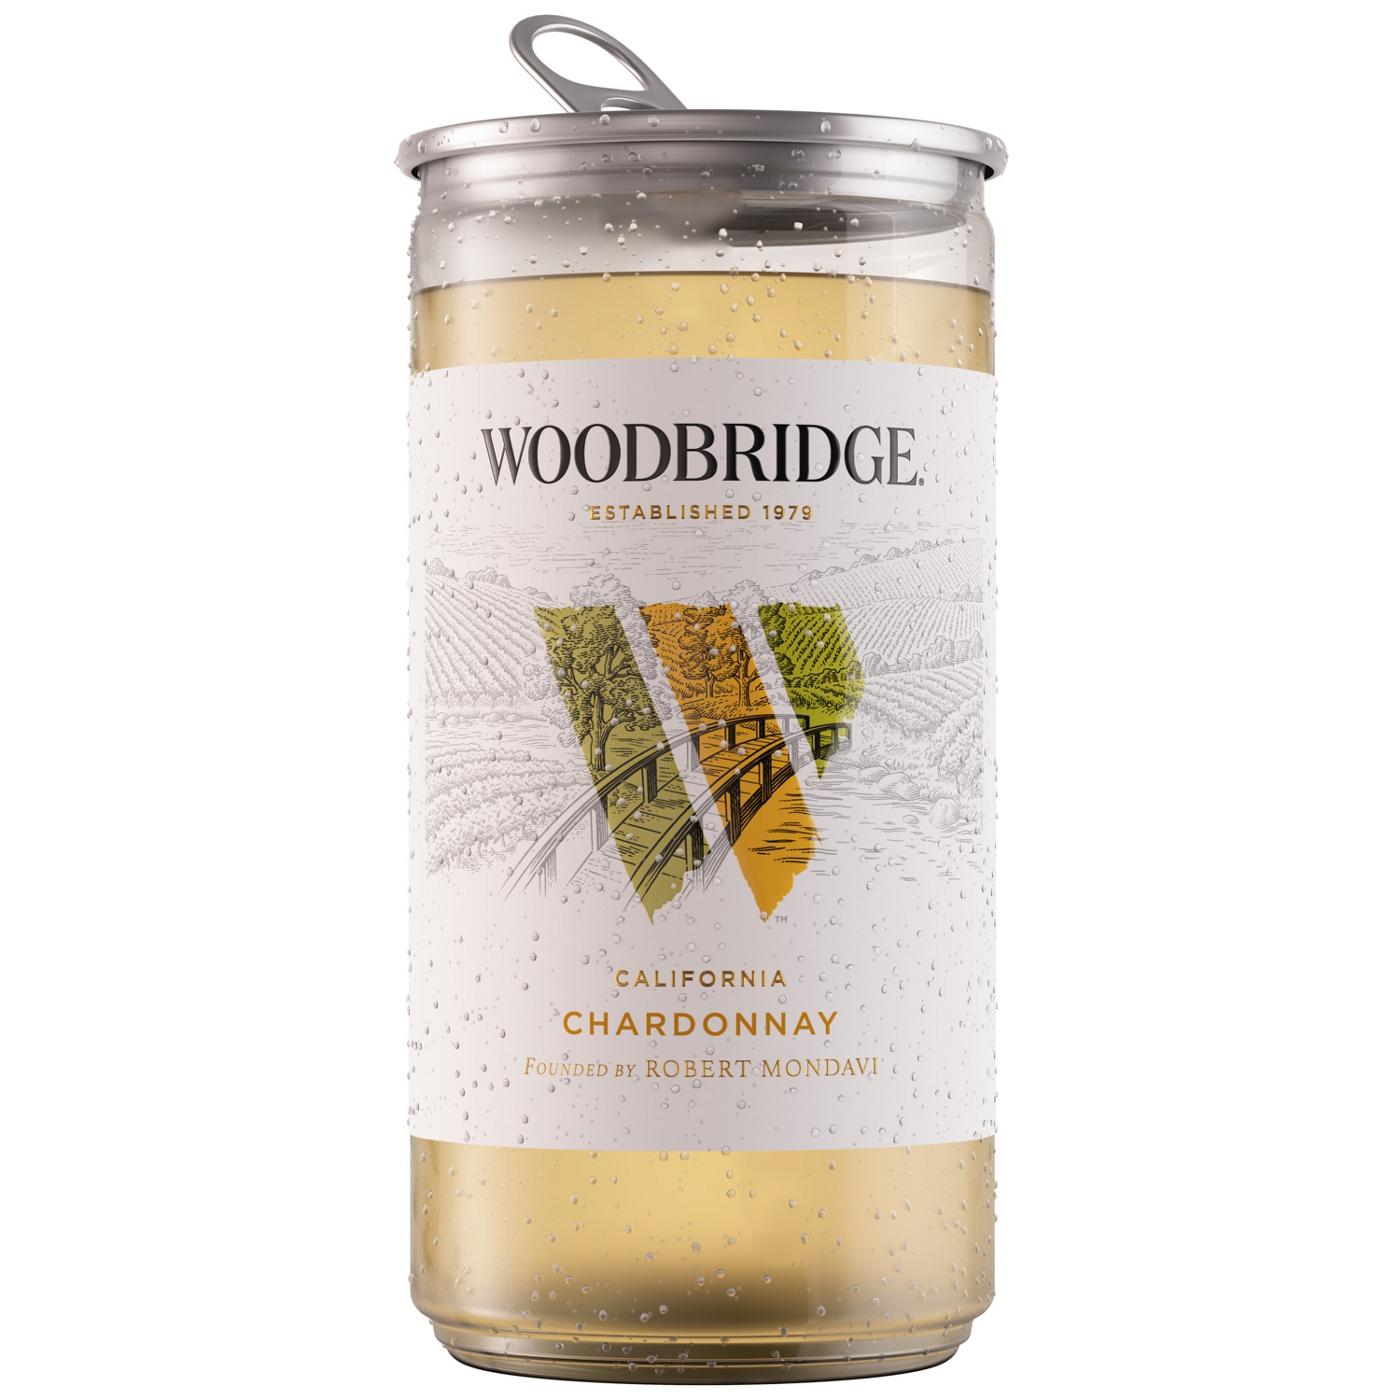 Woodbridge Chardonnay White Wine 187 mL Cans, 4 pk; image 4 of 11